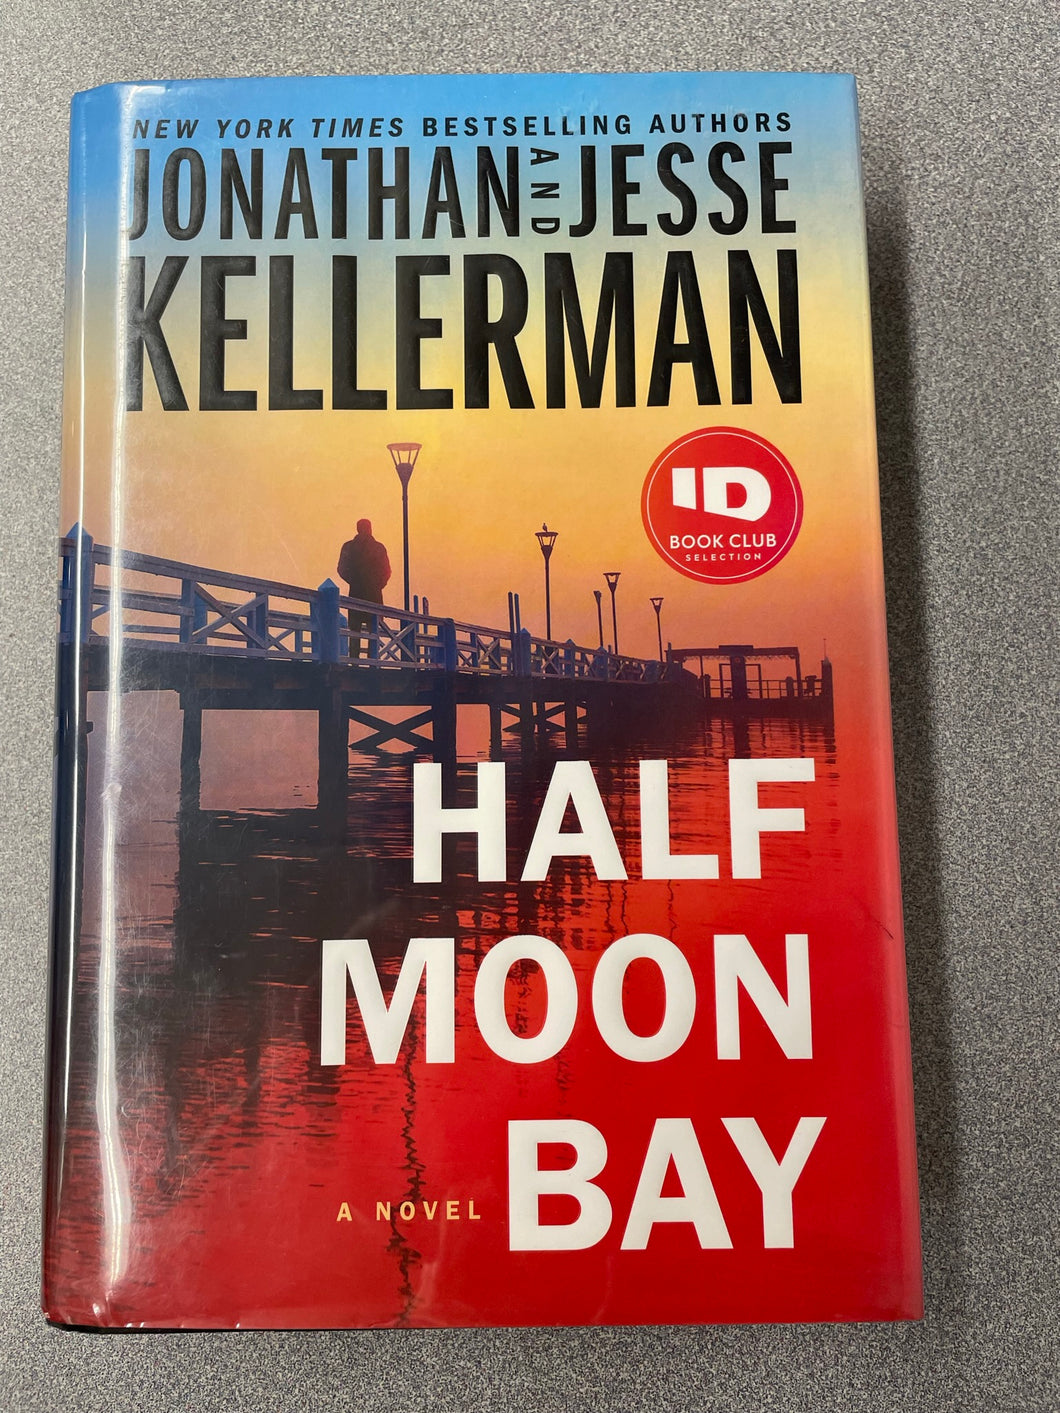 Kellerman, Jonathan and Jesse Kellerman, Half Moon Bay [2020] MY 6/23